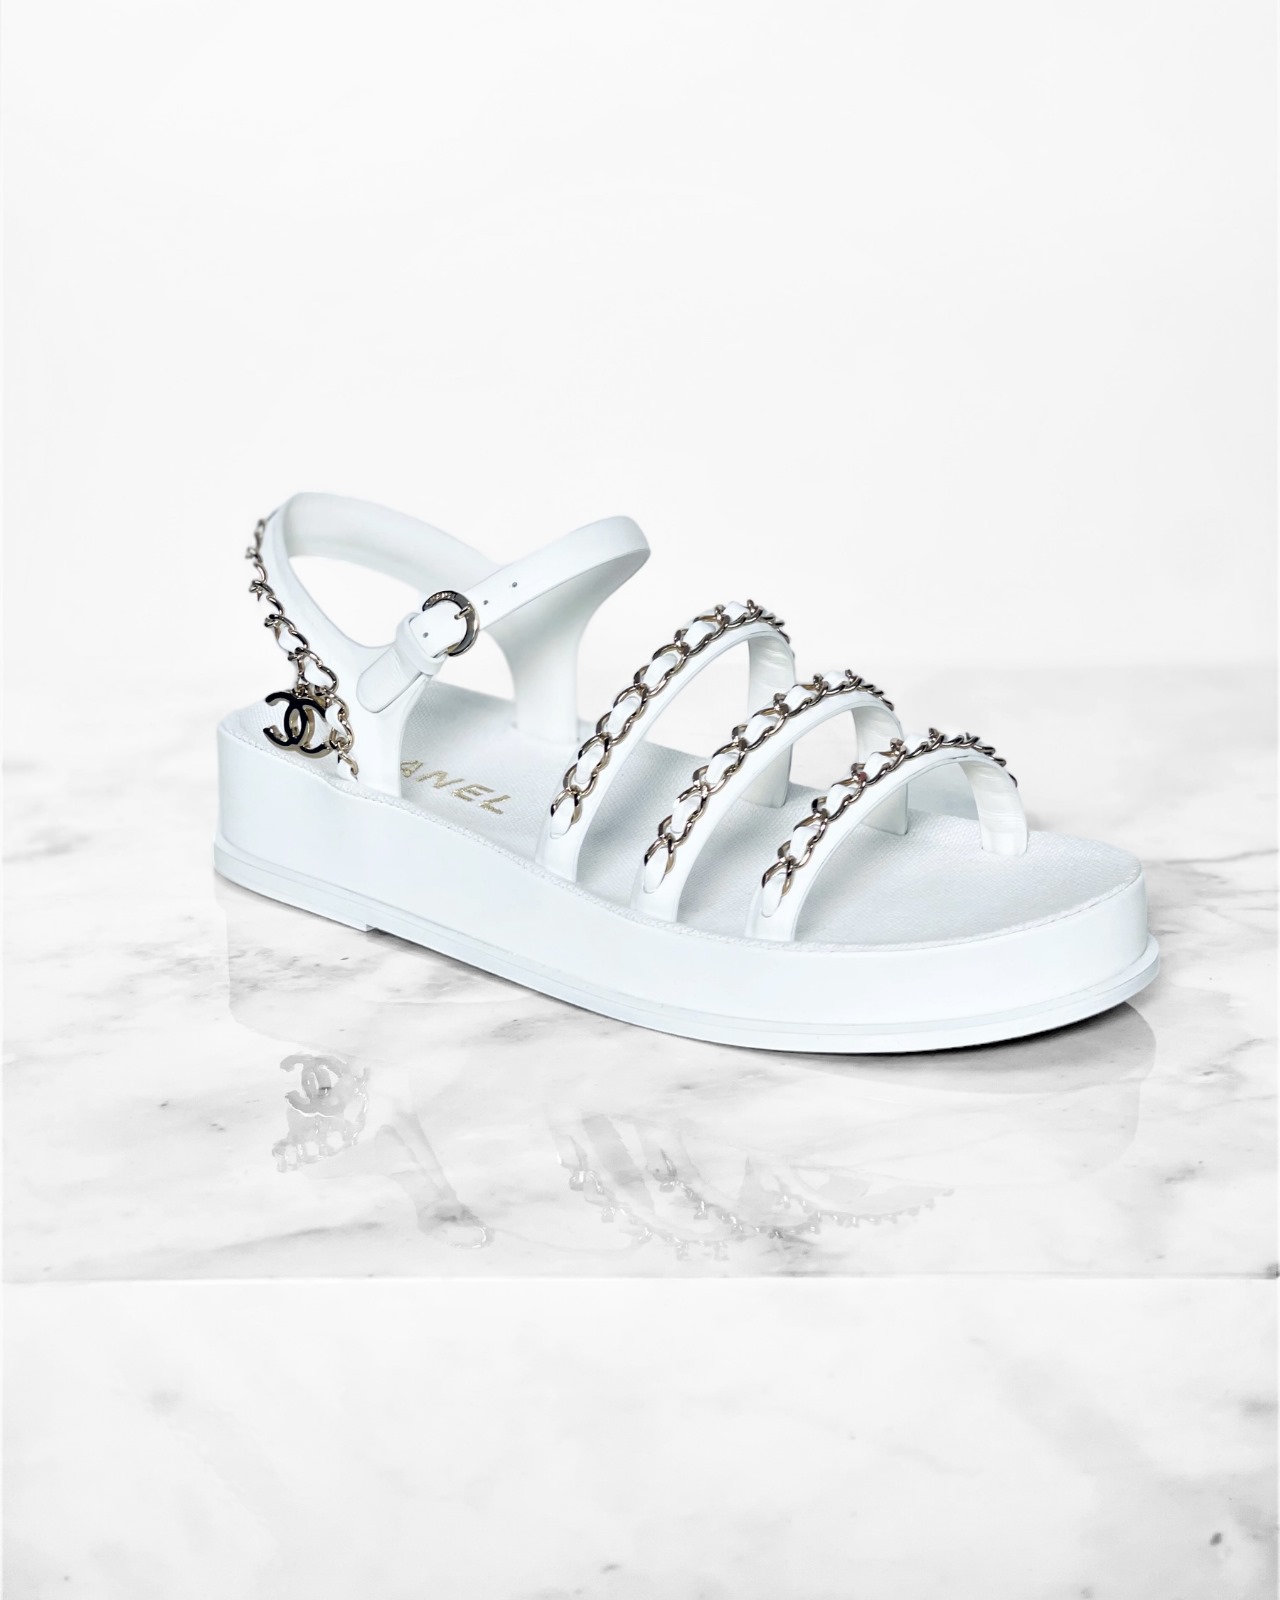 Chanel Ivory Lambskin Espadrille Rope Sandals - Size EU 36